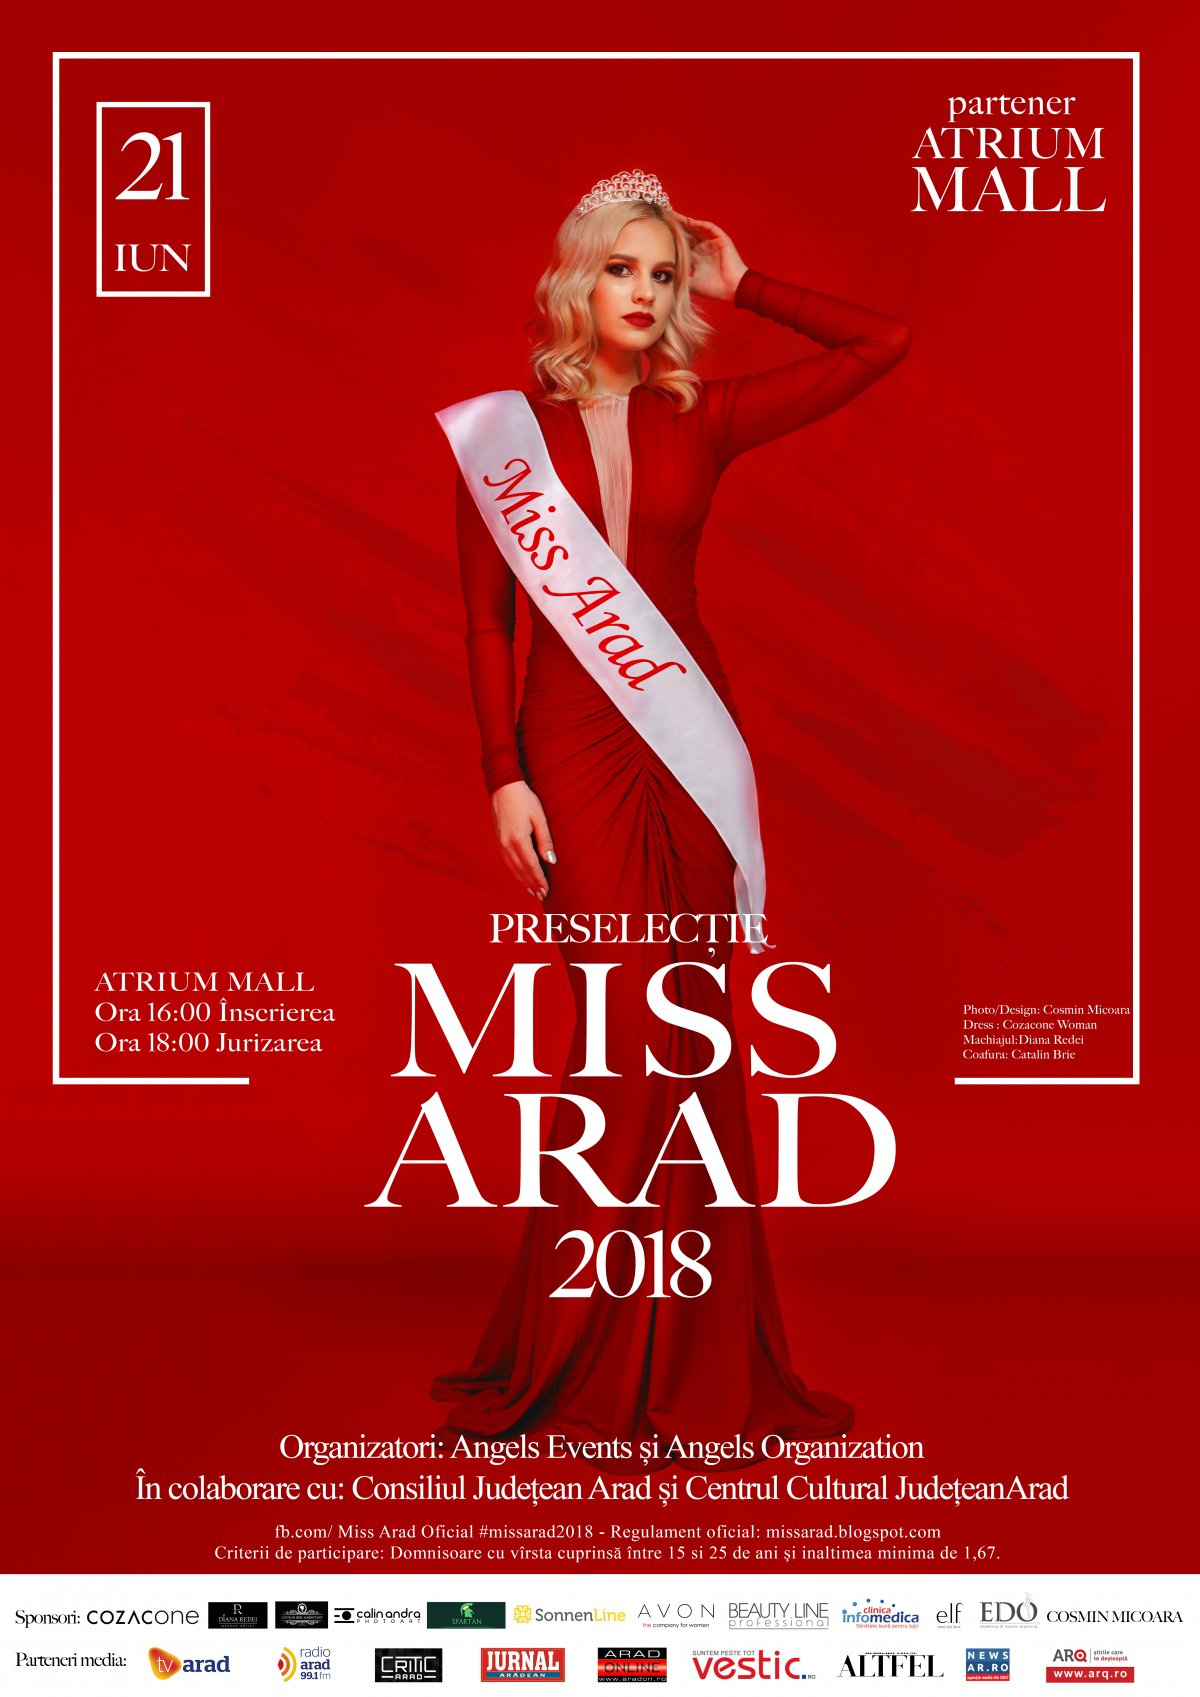 Miss Arad 2018 - Preselecția